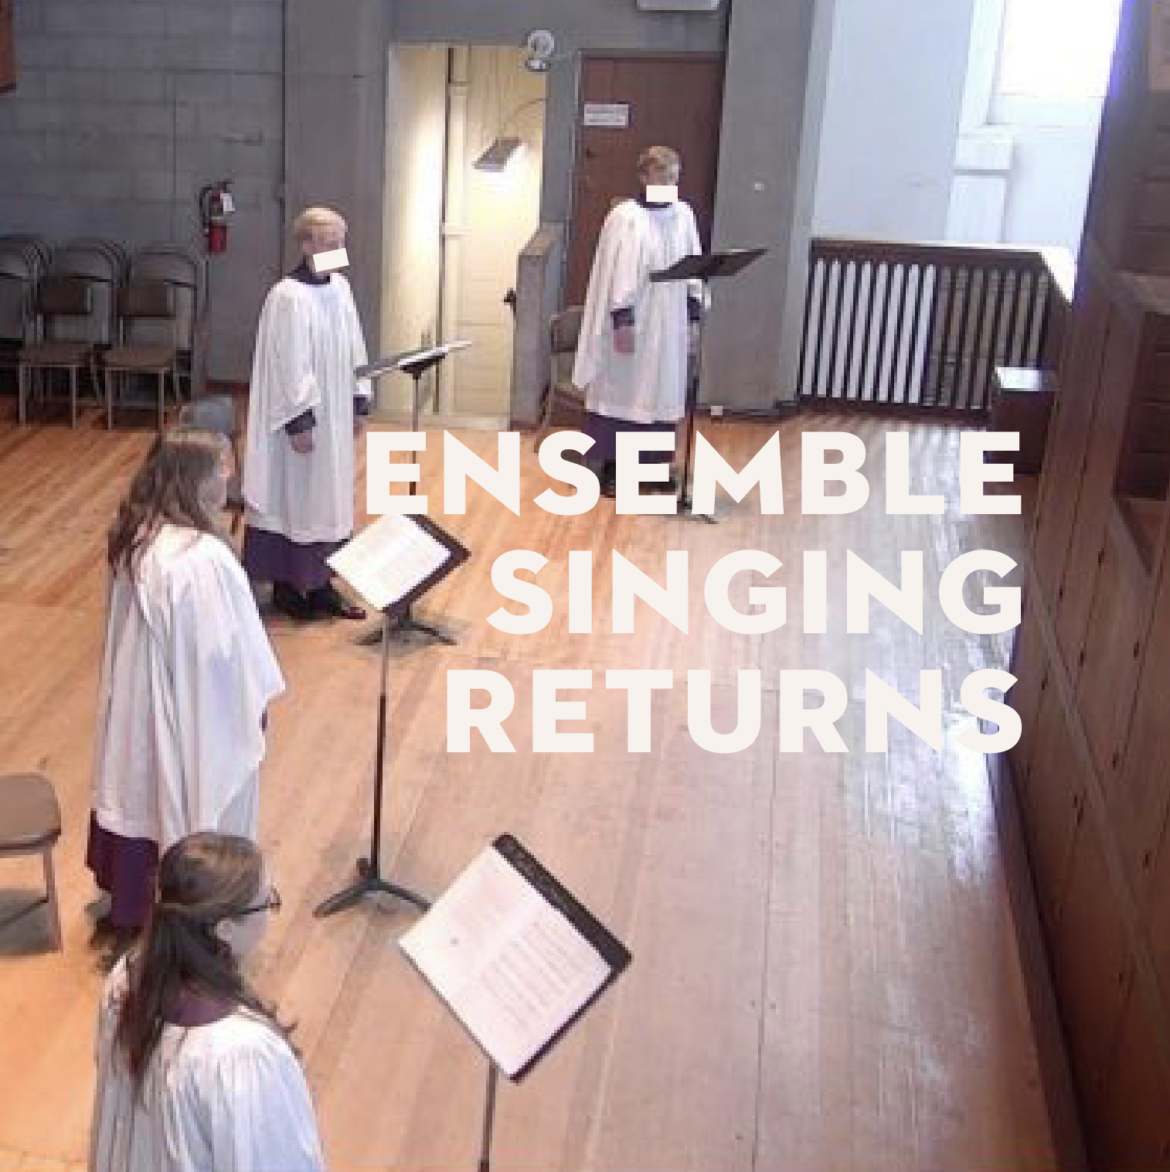 Ensemble Singing Returns to Saint Mark’s Cathedral